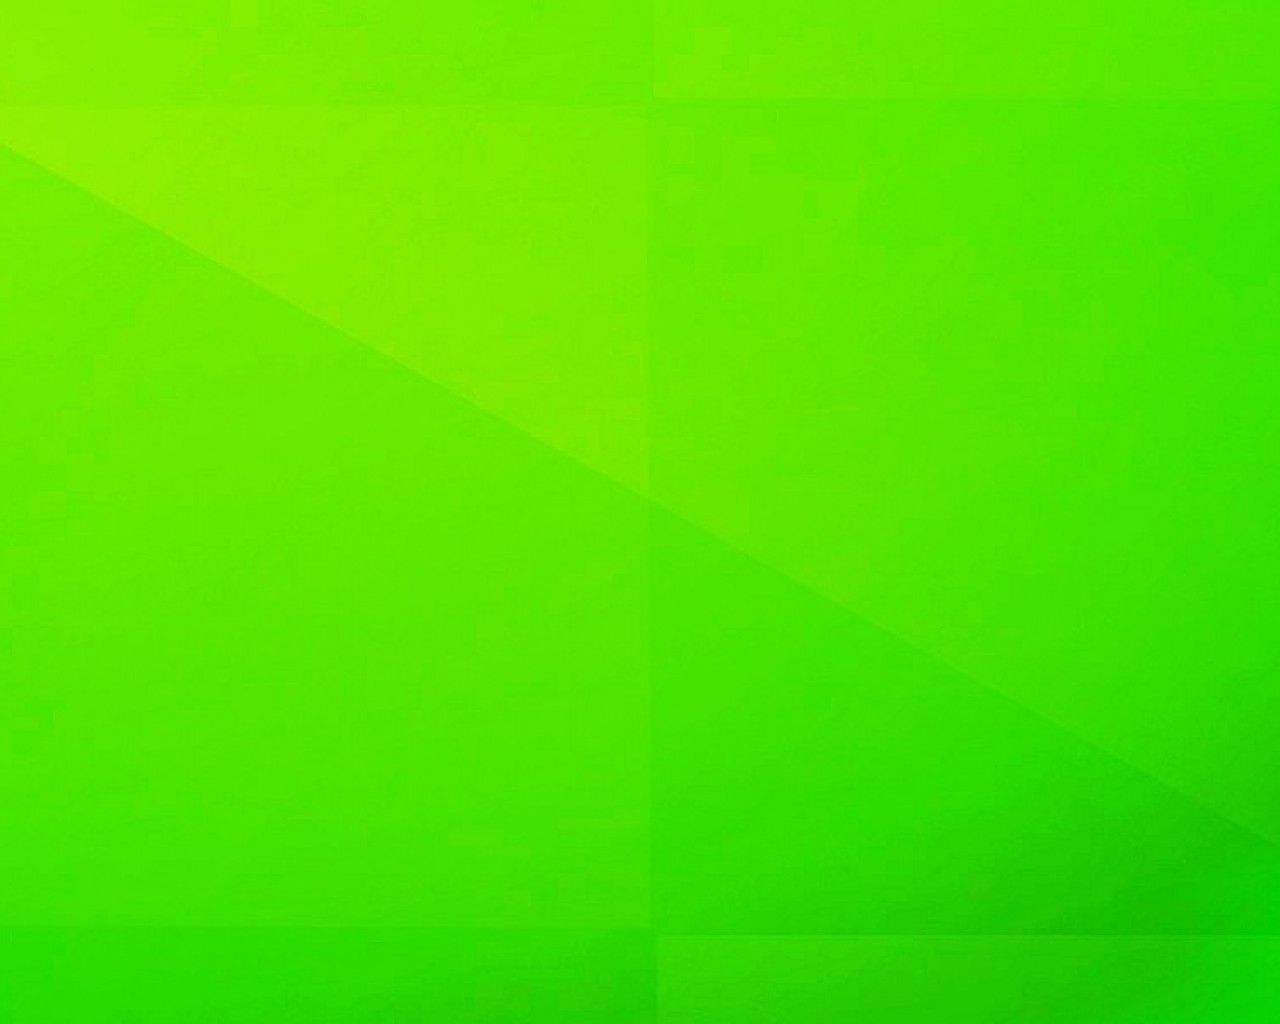 Solid Lime Green HD Wallpaper.jpg